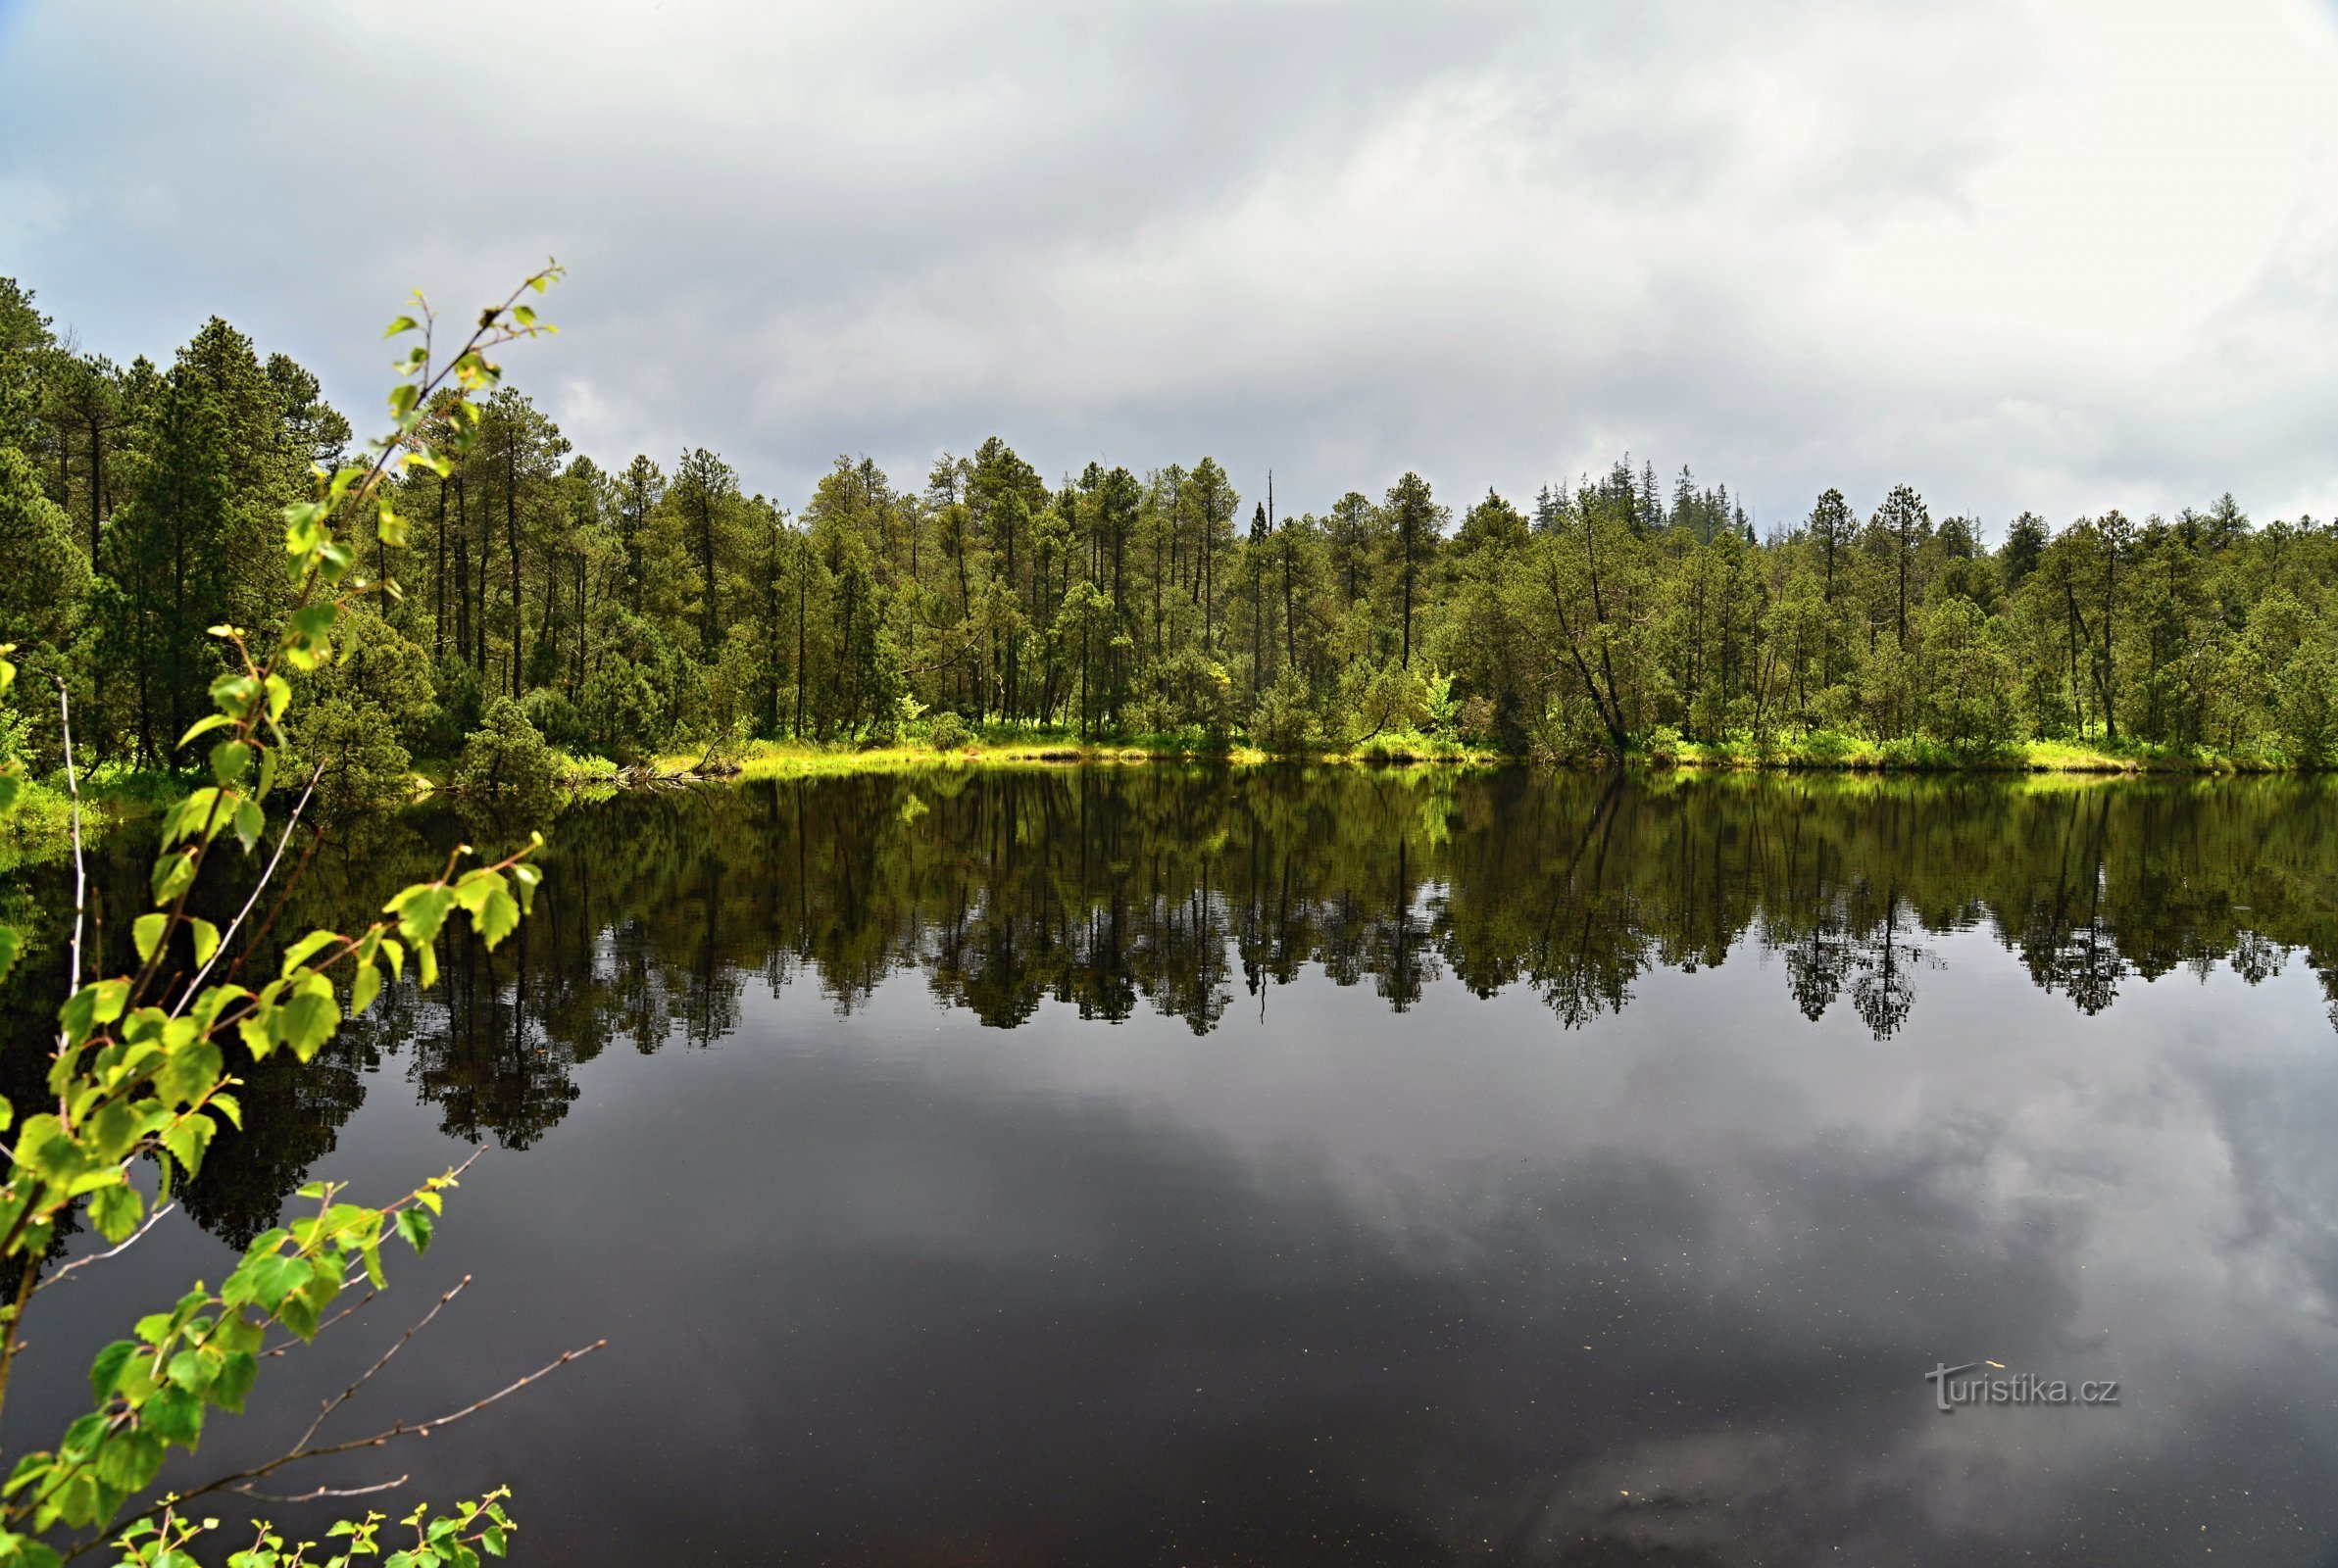 Rejvíz 国家级自然保护区 - 大苔藓湖